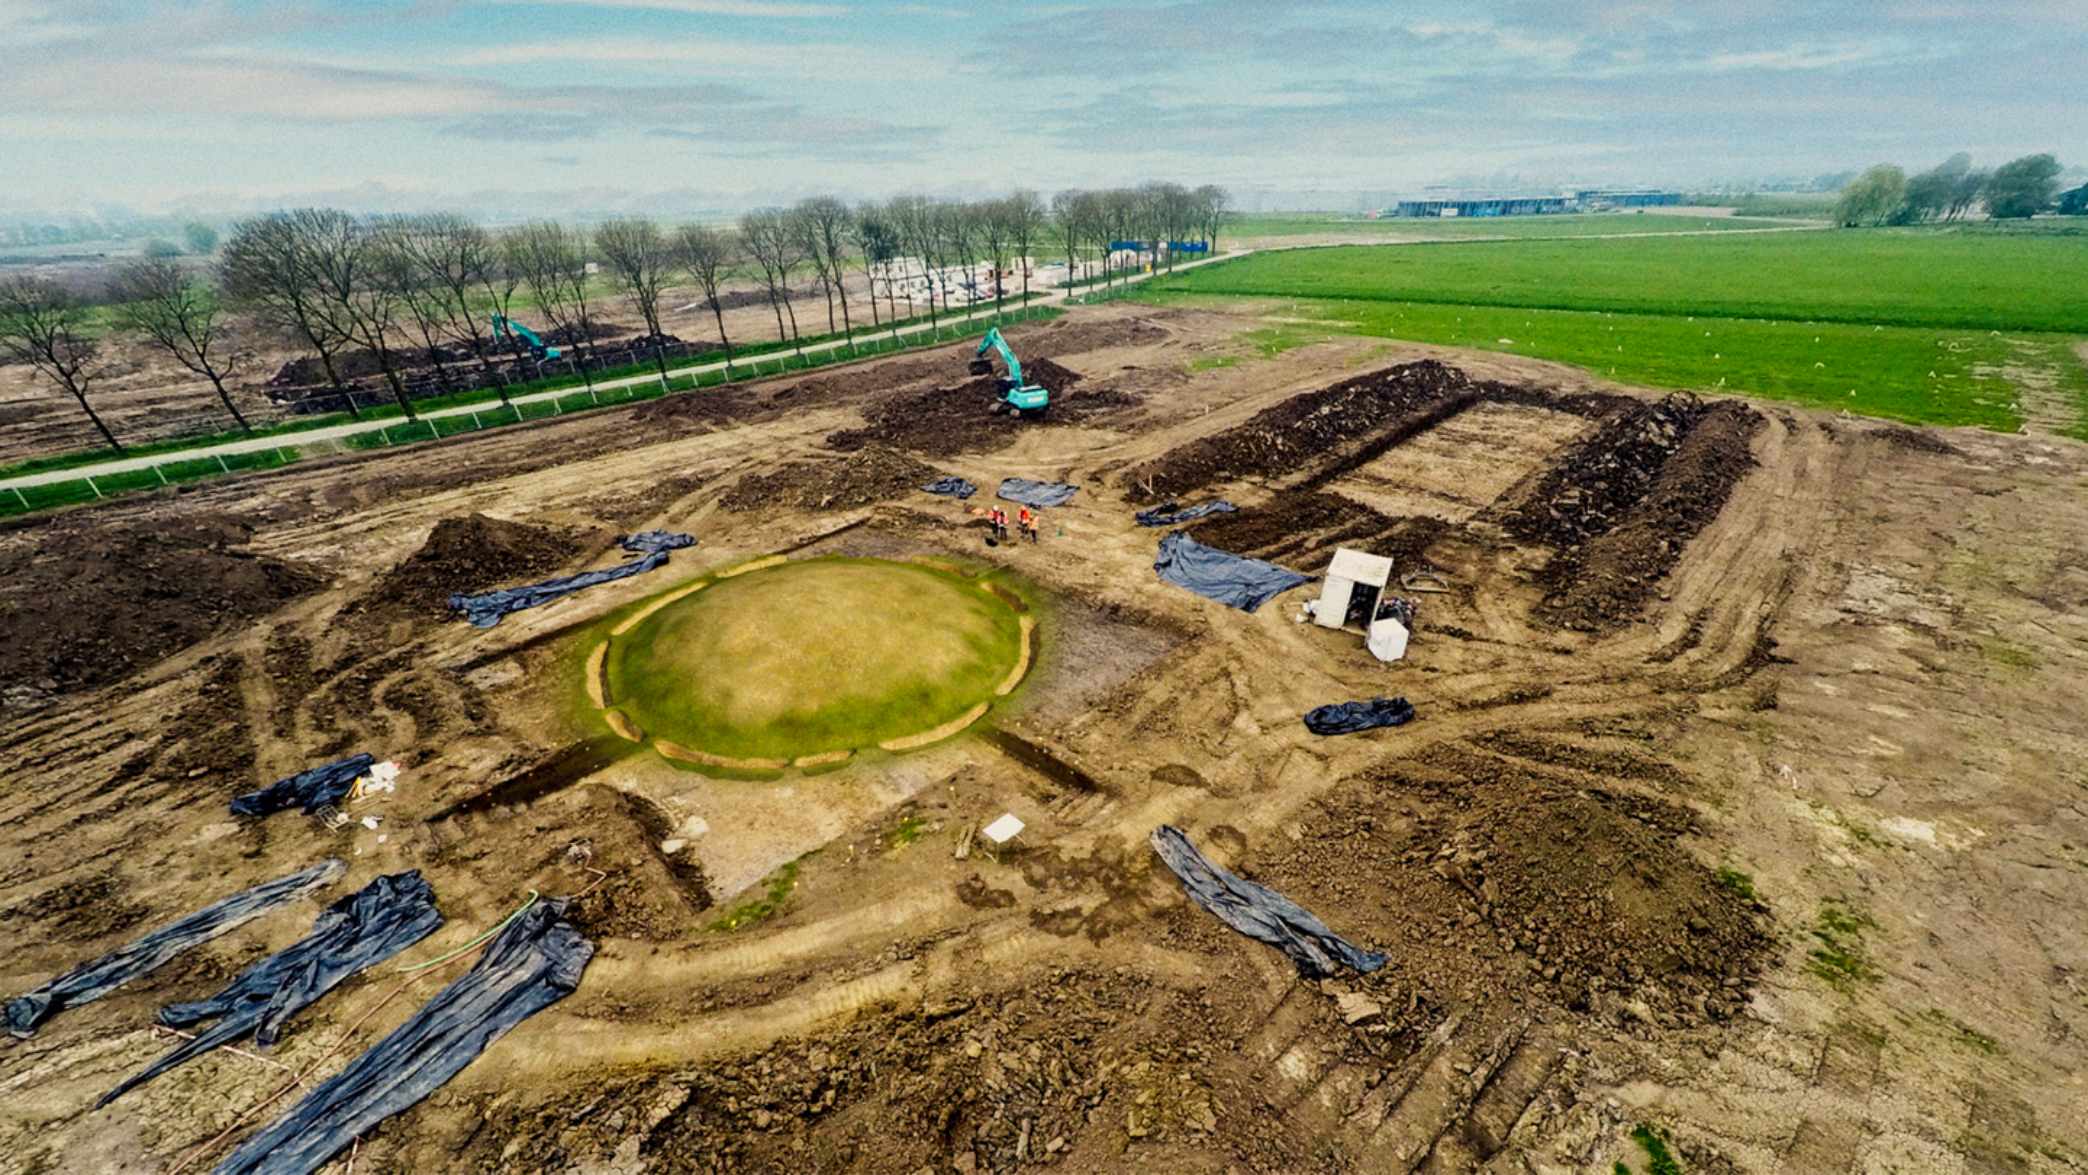 4,000-year-old Stonehenge of the Netherlands reveals its secrets 3